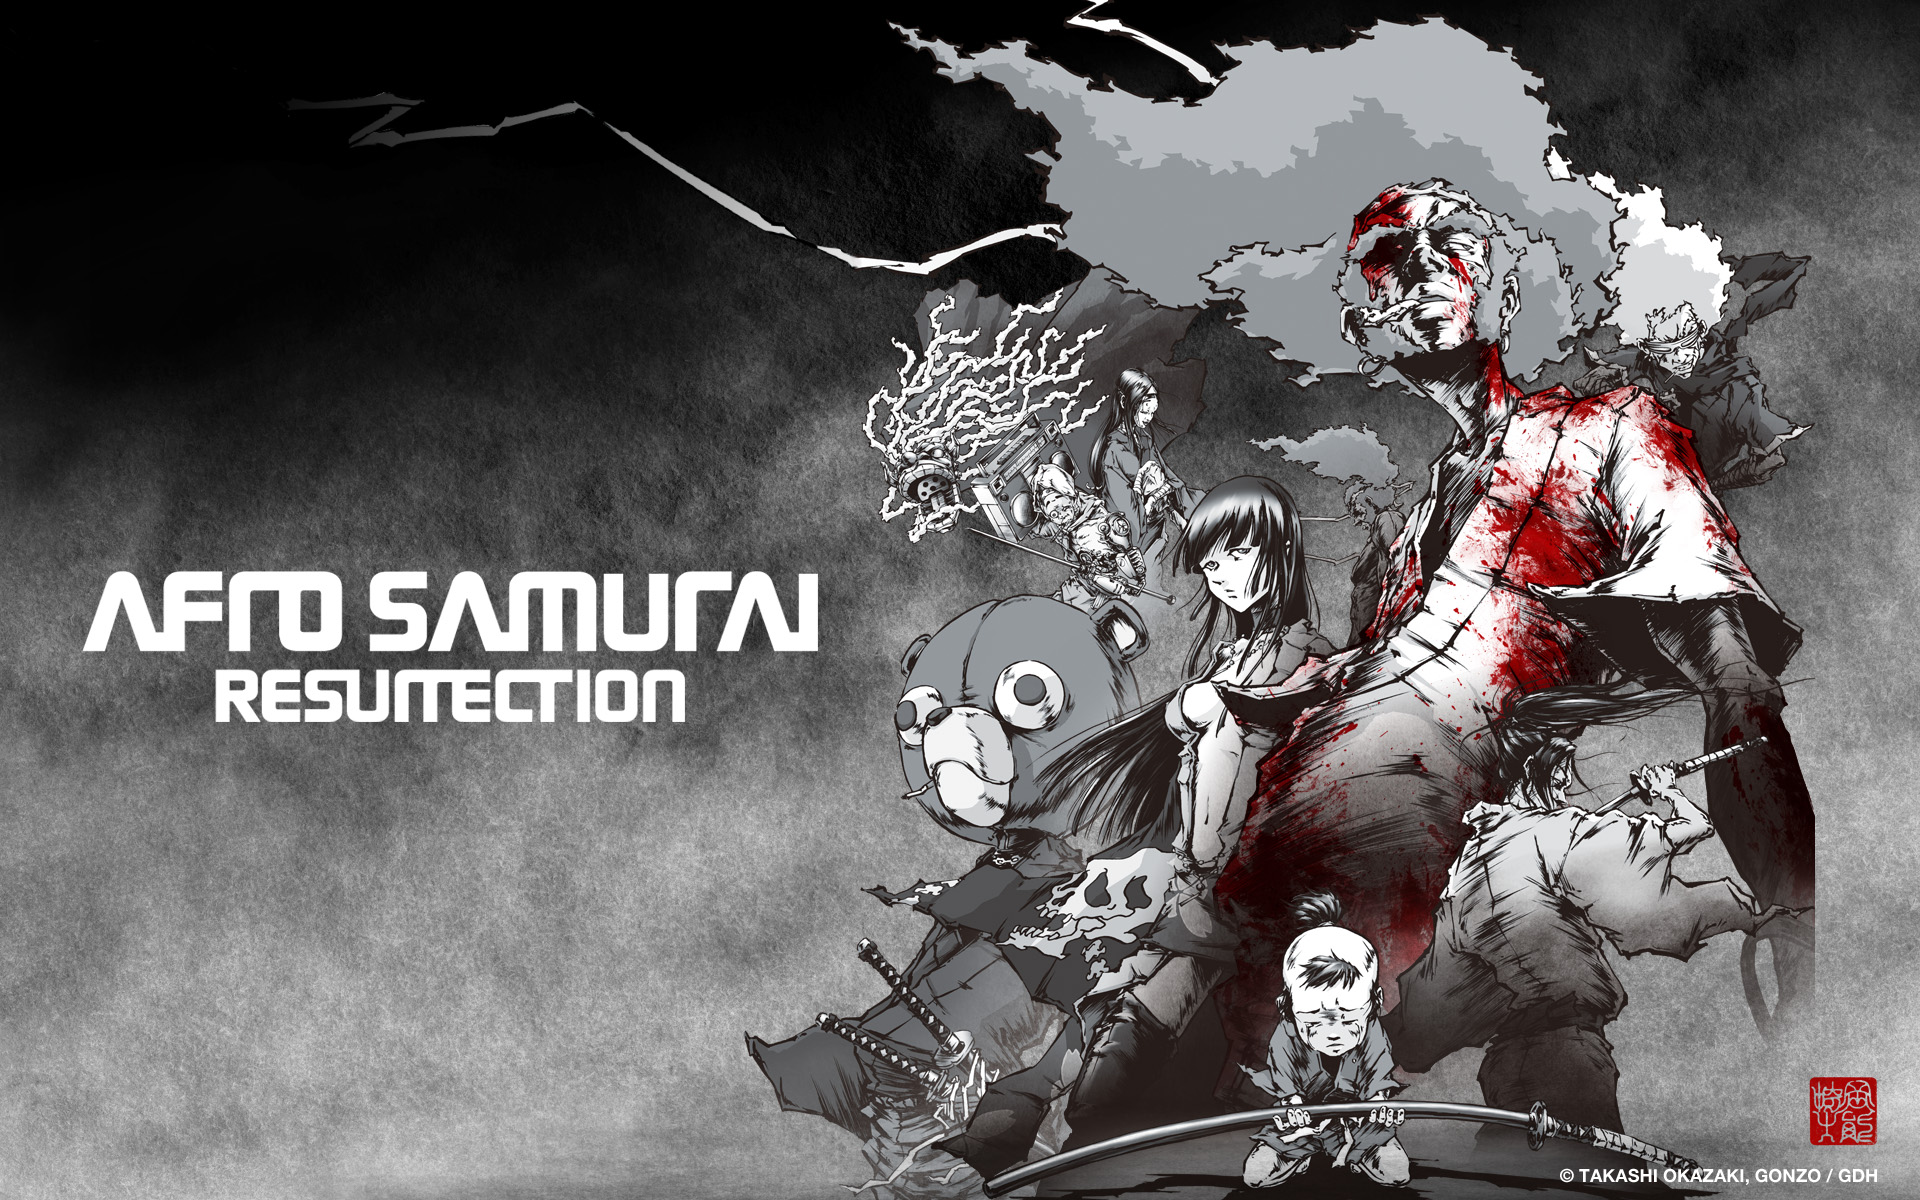 Anime characters Afro Samurai, Kuma, and Okiku stand together on a vibrant background.